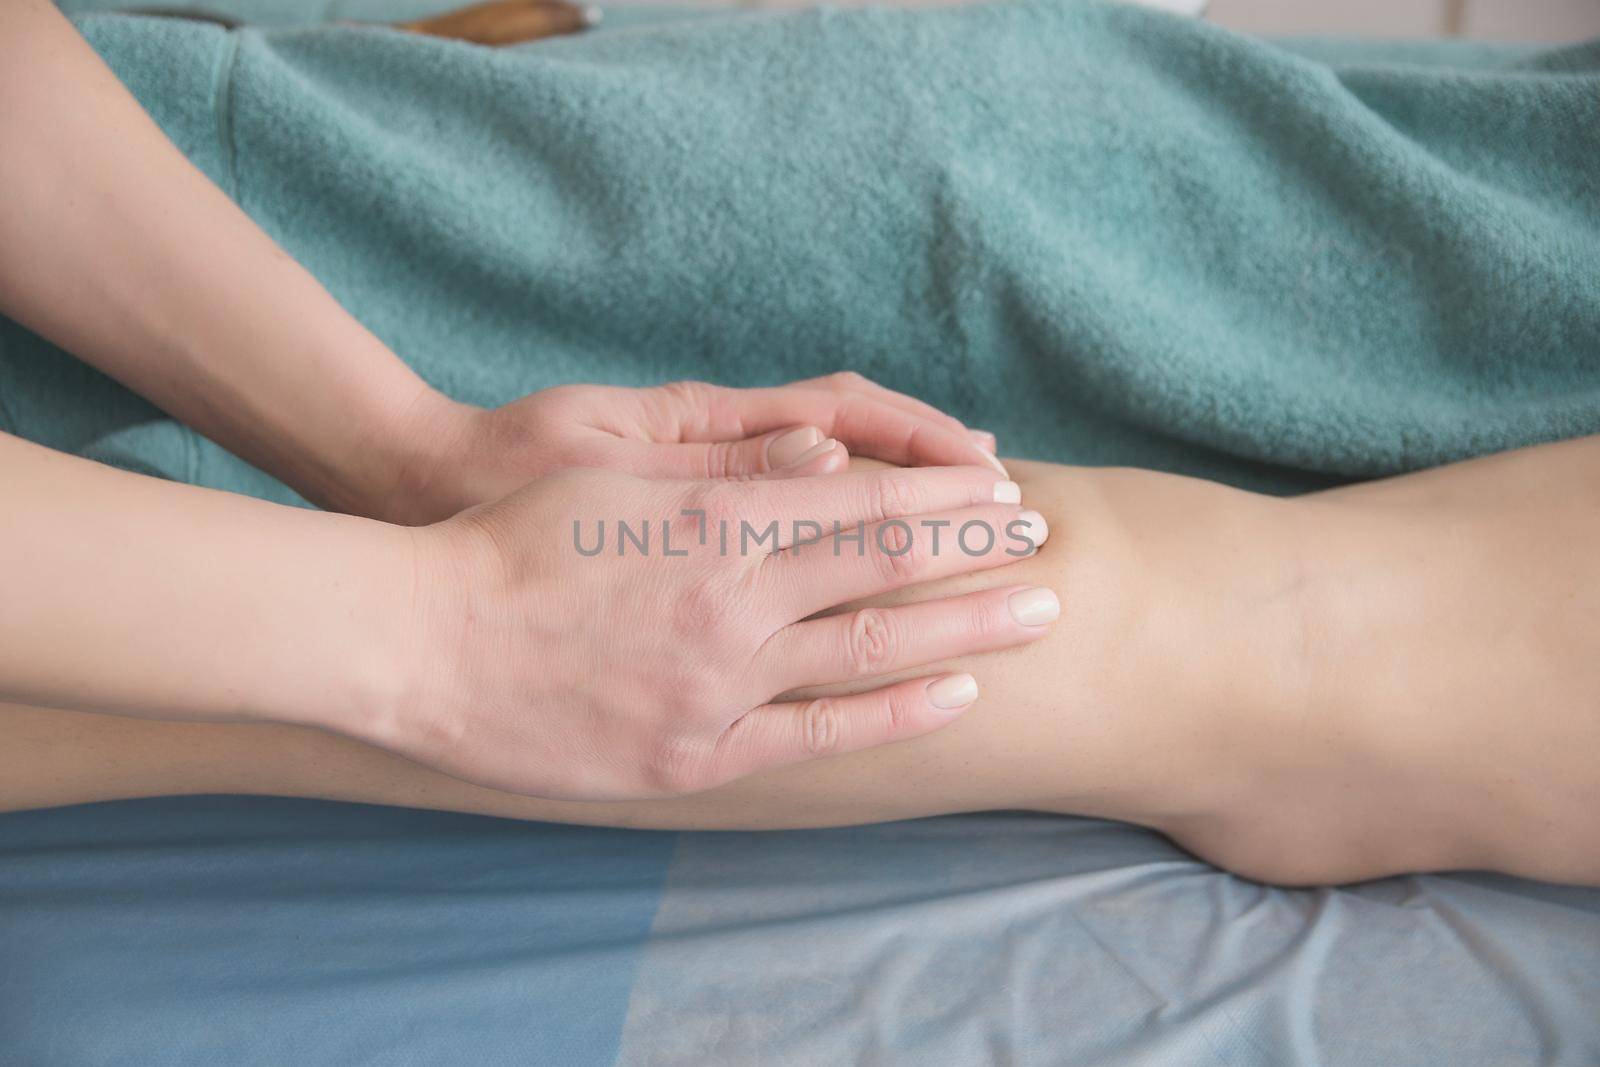 anti-cellulite foot massage in the spa salon makes the girl by ozornina